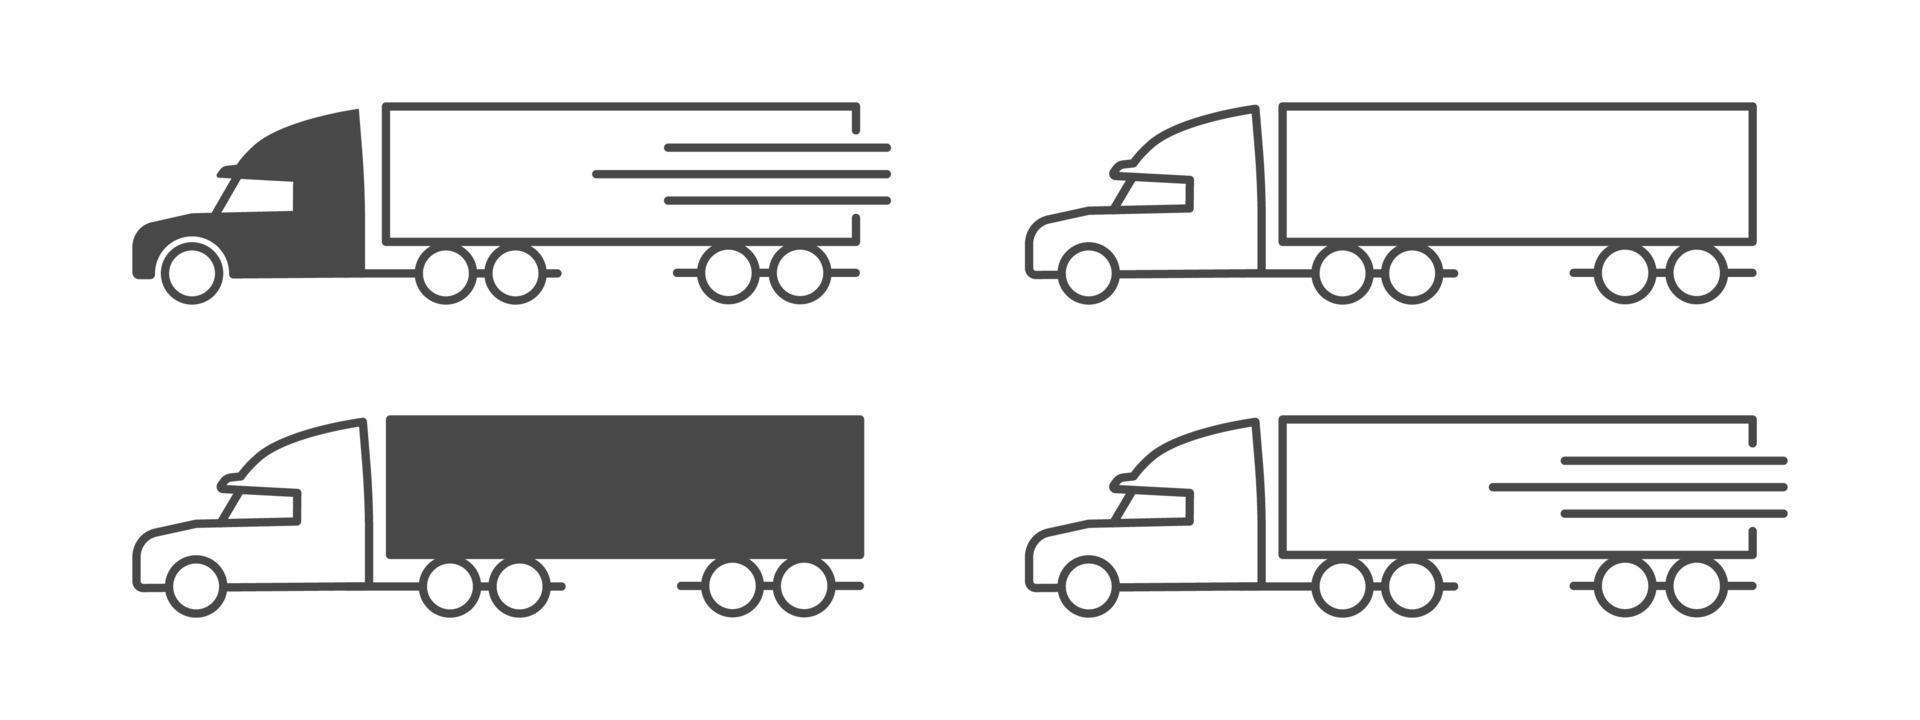 levering pictogrammen. Amerikaans vrachtauto pictogrammen. levering onderhoud pictogrammen. vector illustratie